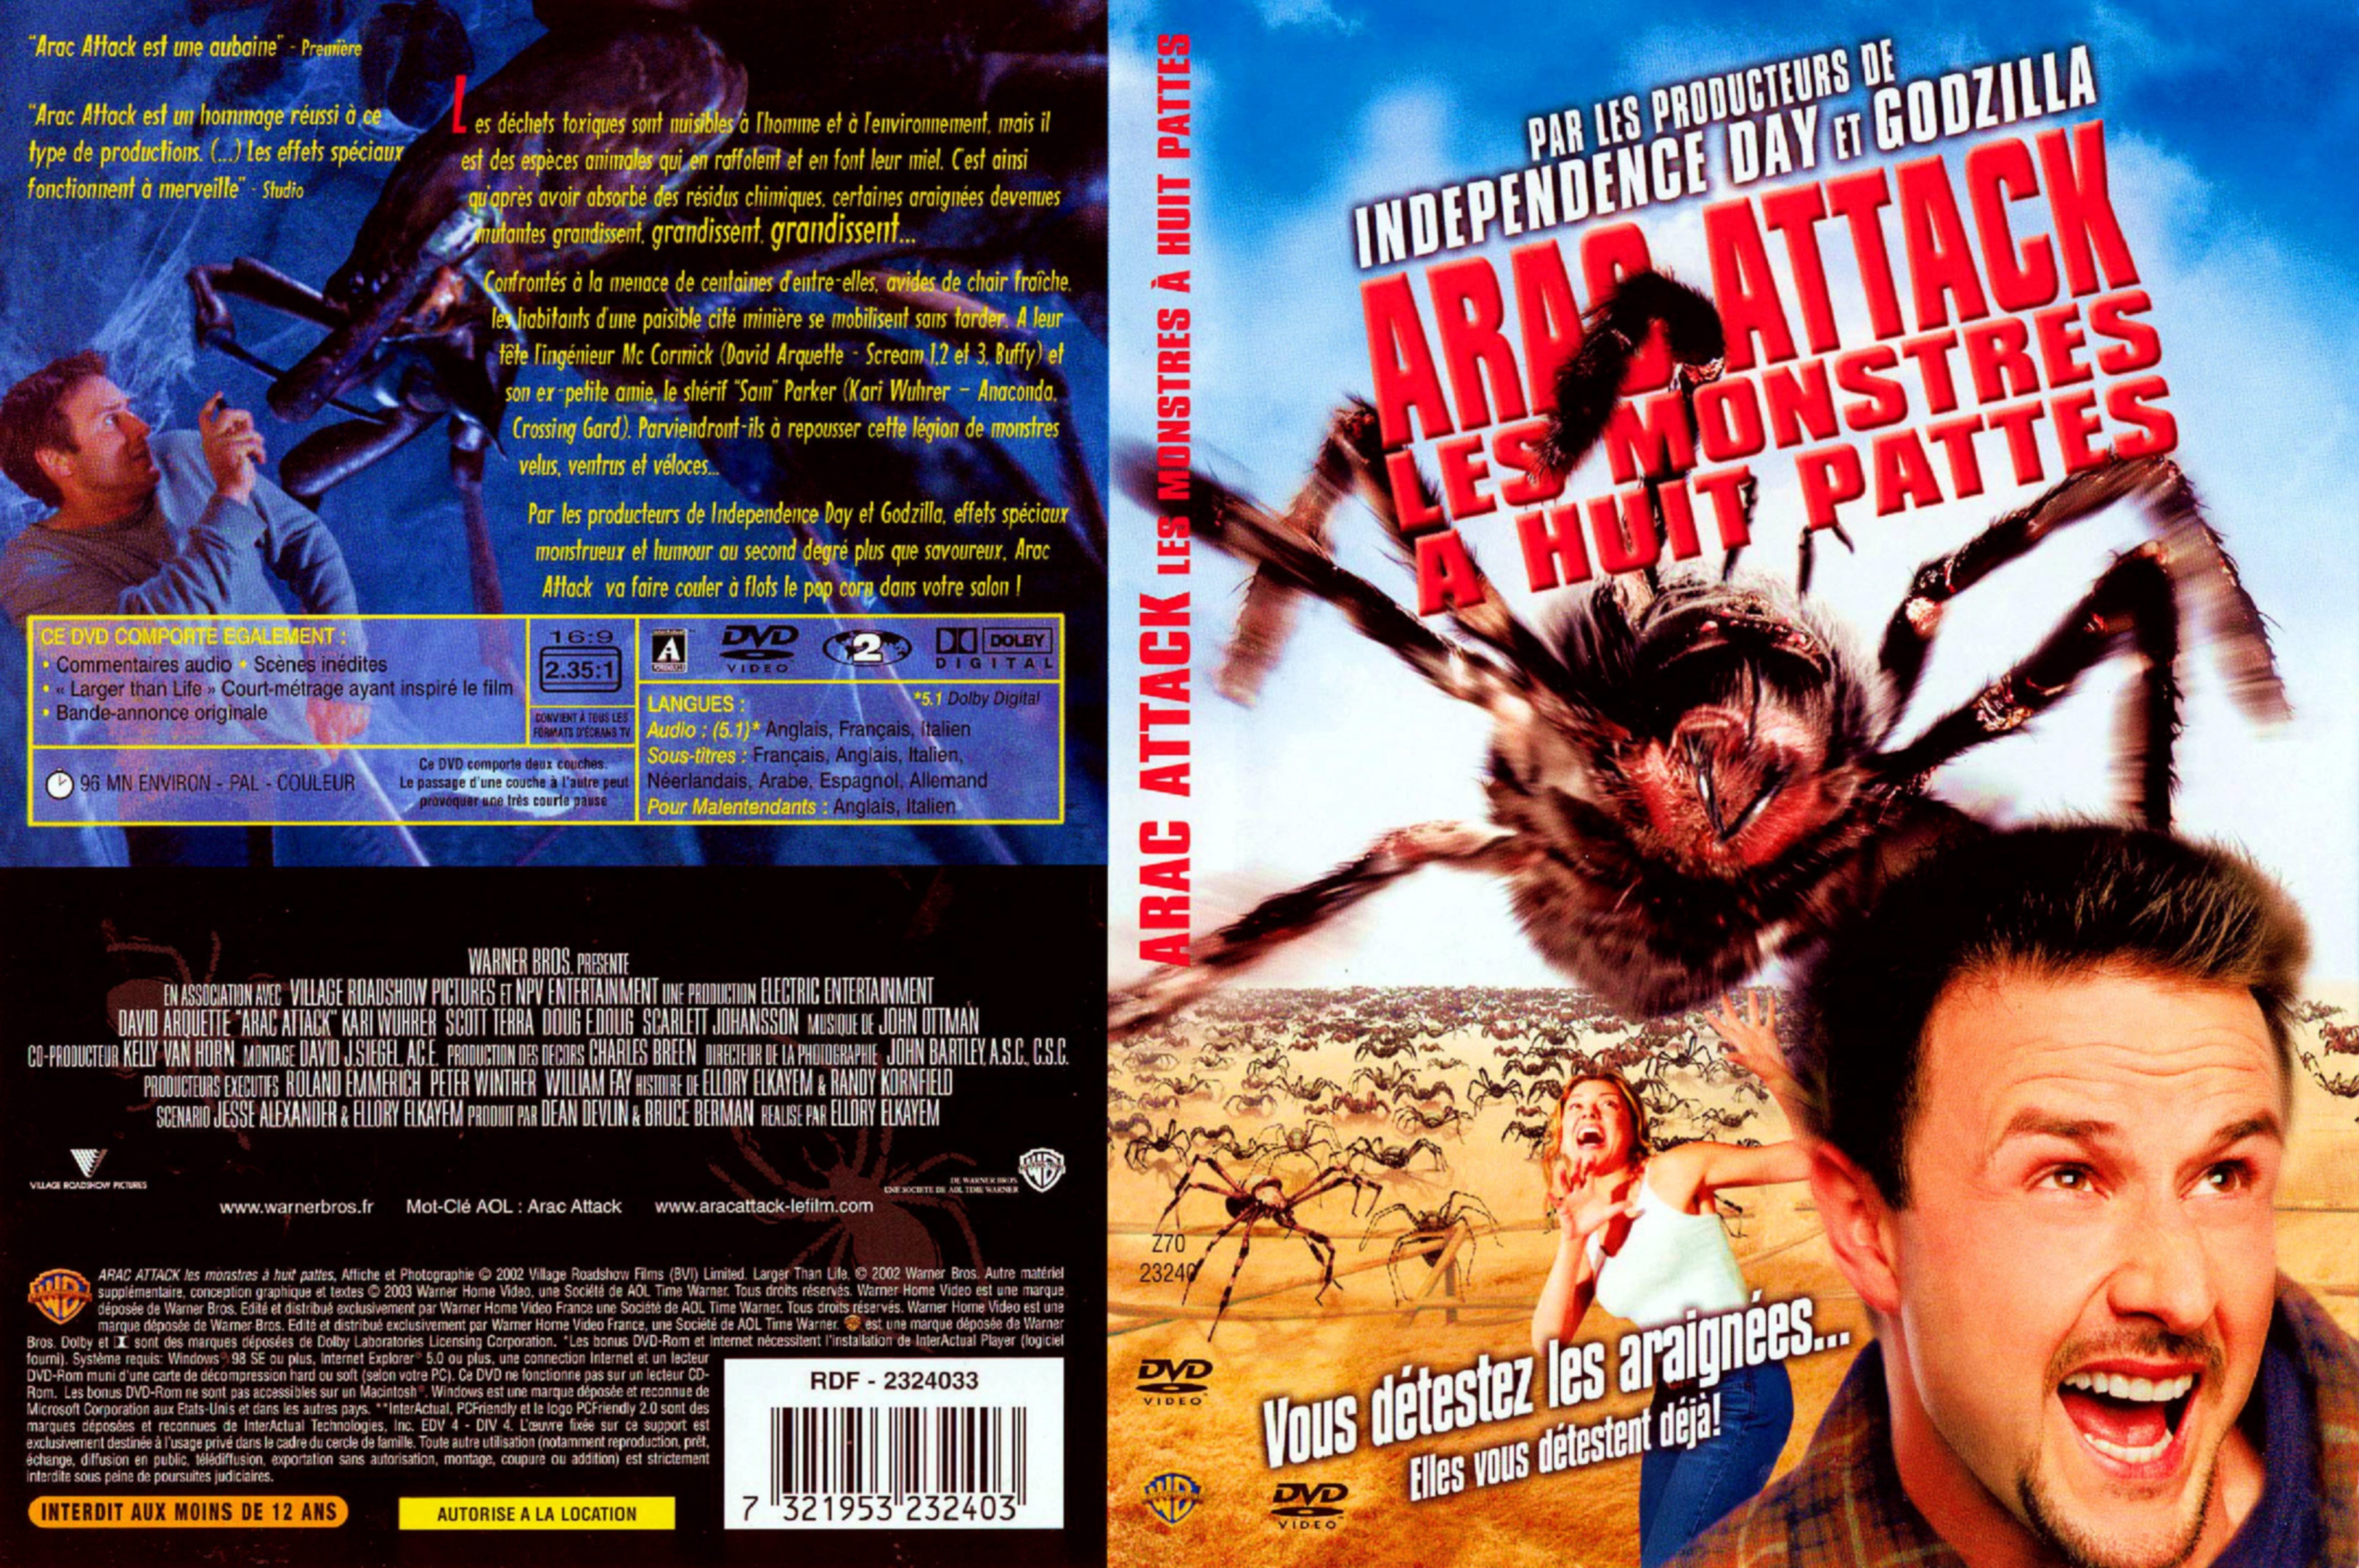 Jaquette DVD Arac attack